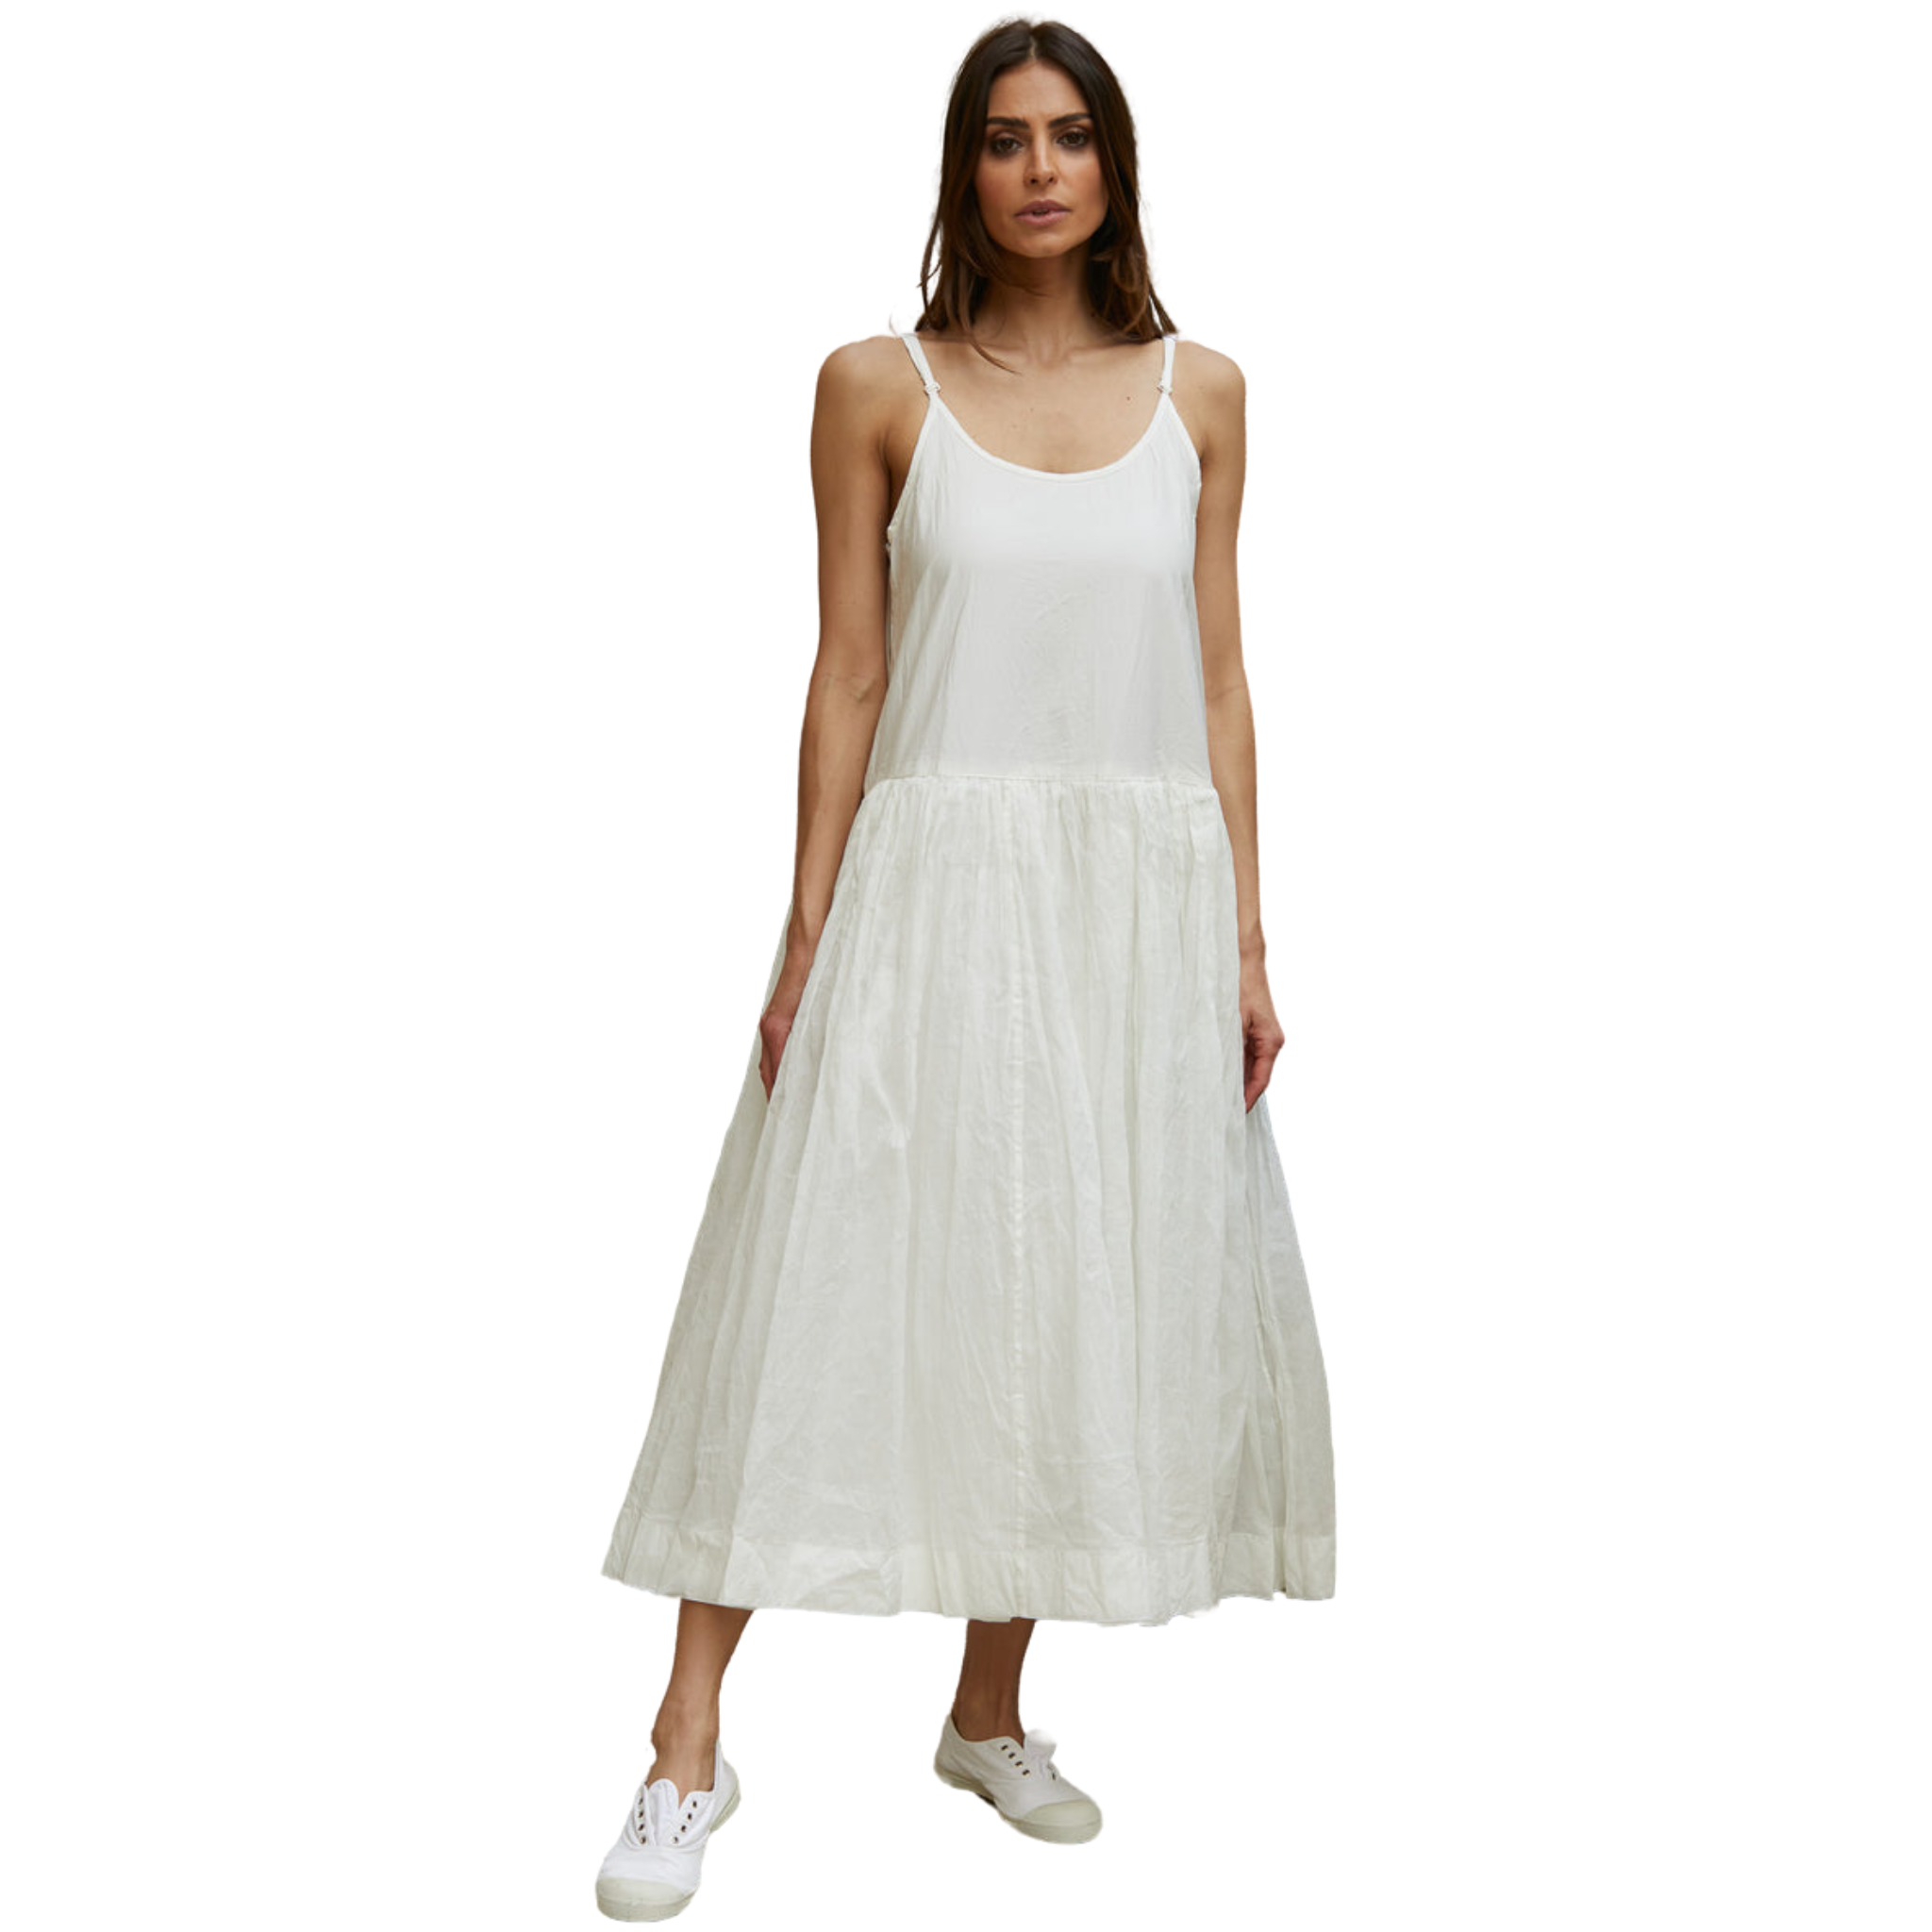 Meg by Design Cotton Organdy Long Tutu Slip Dress